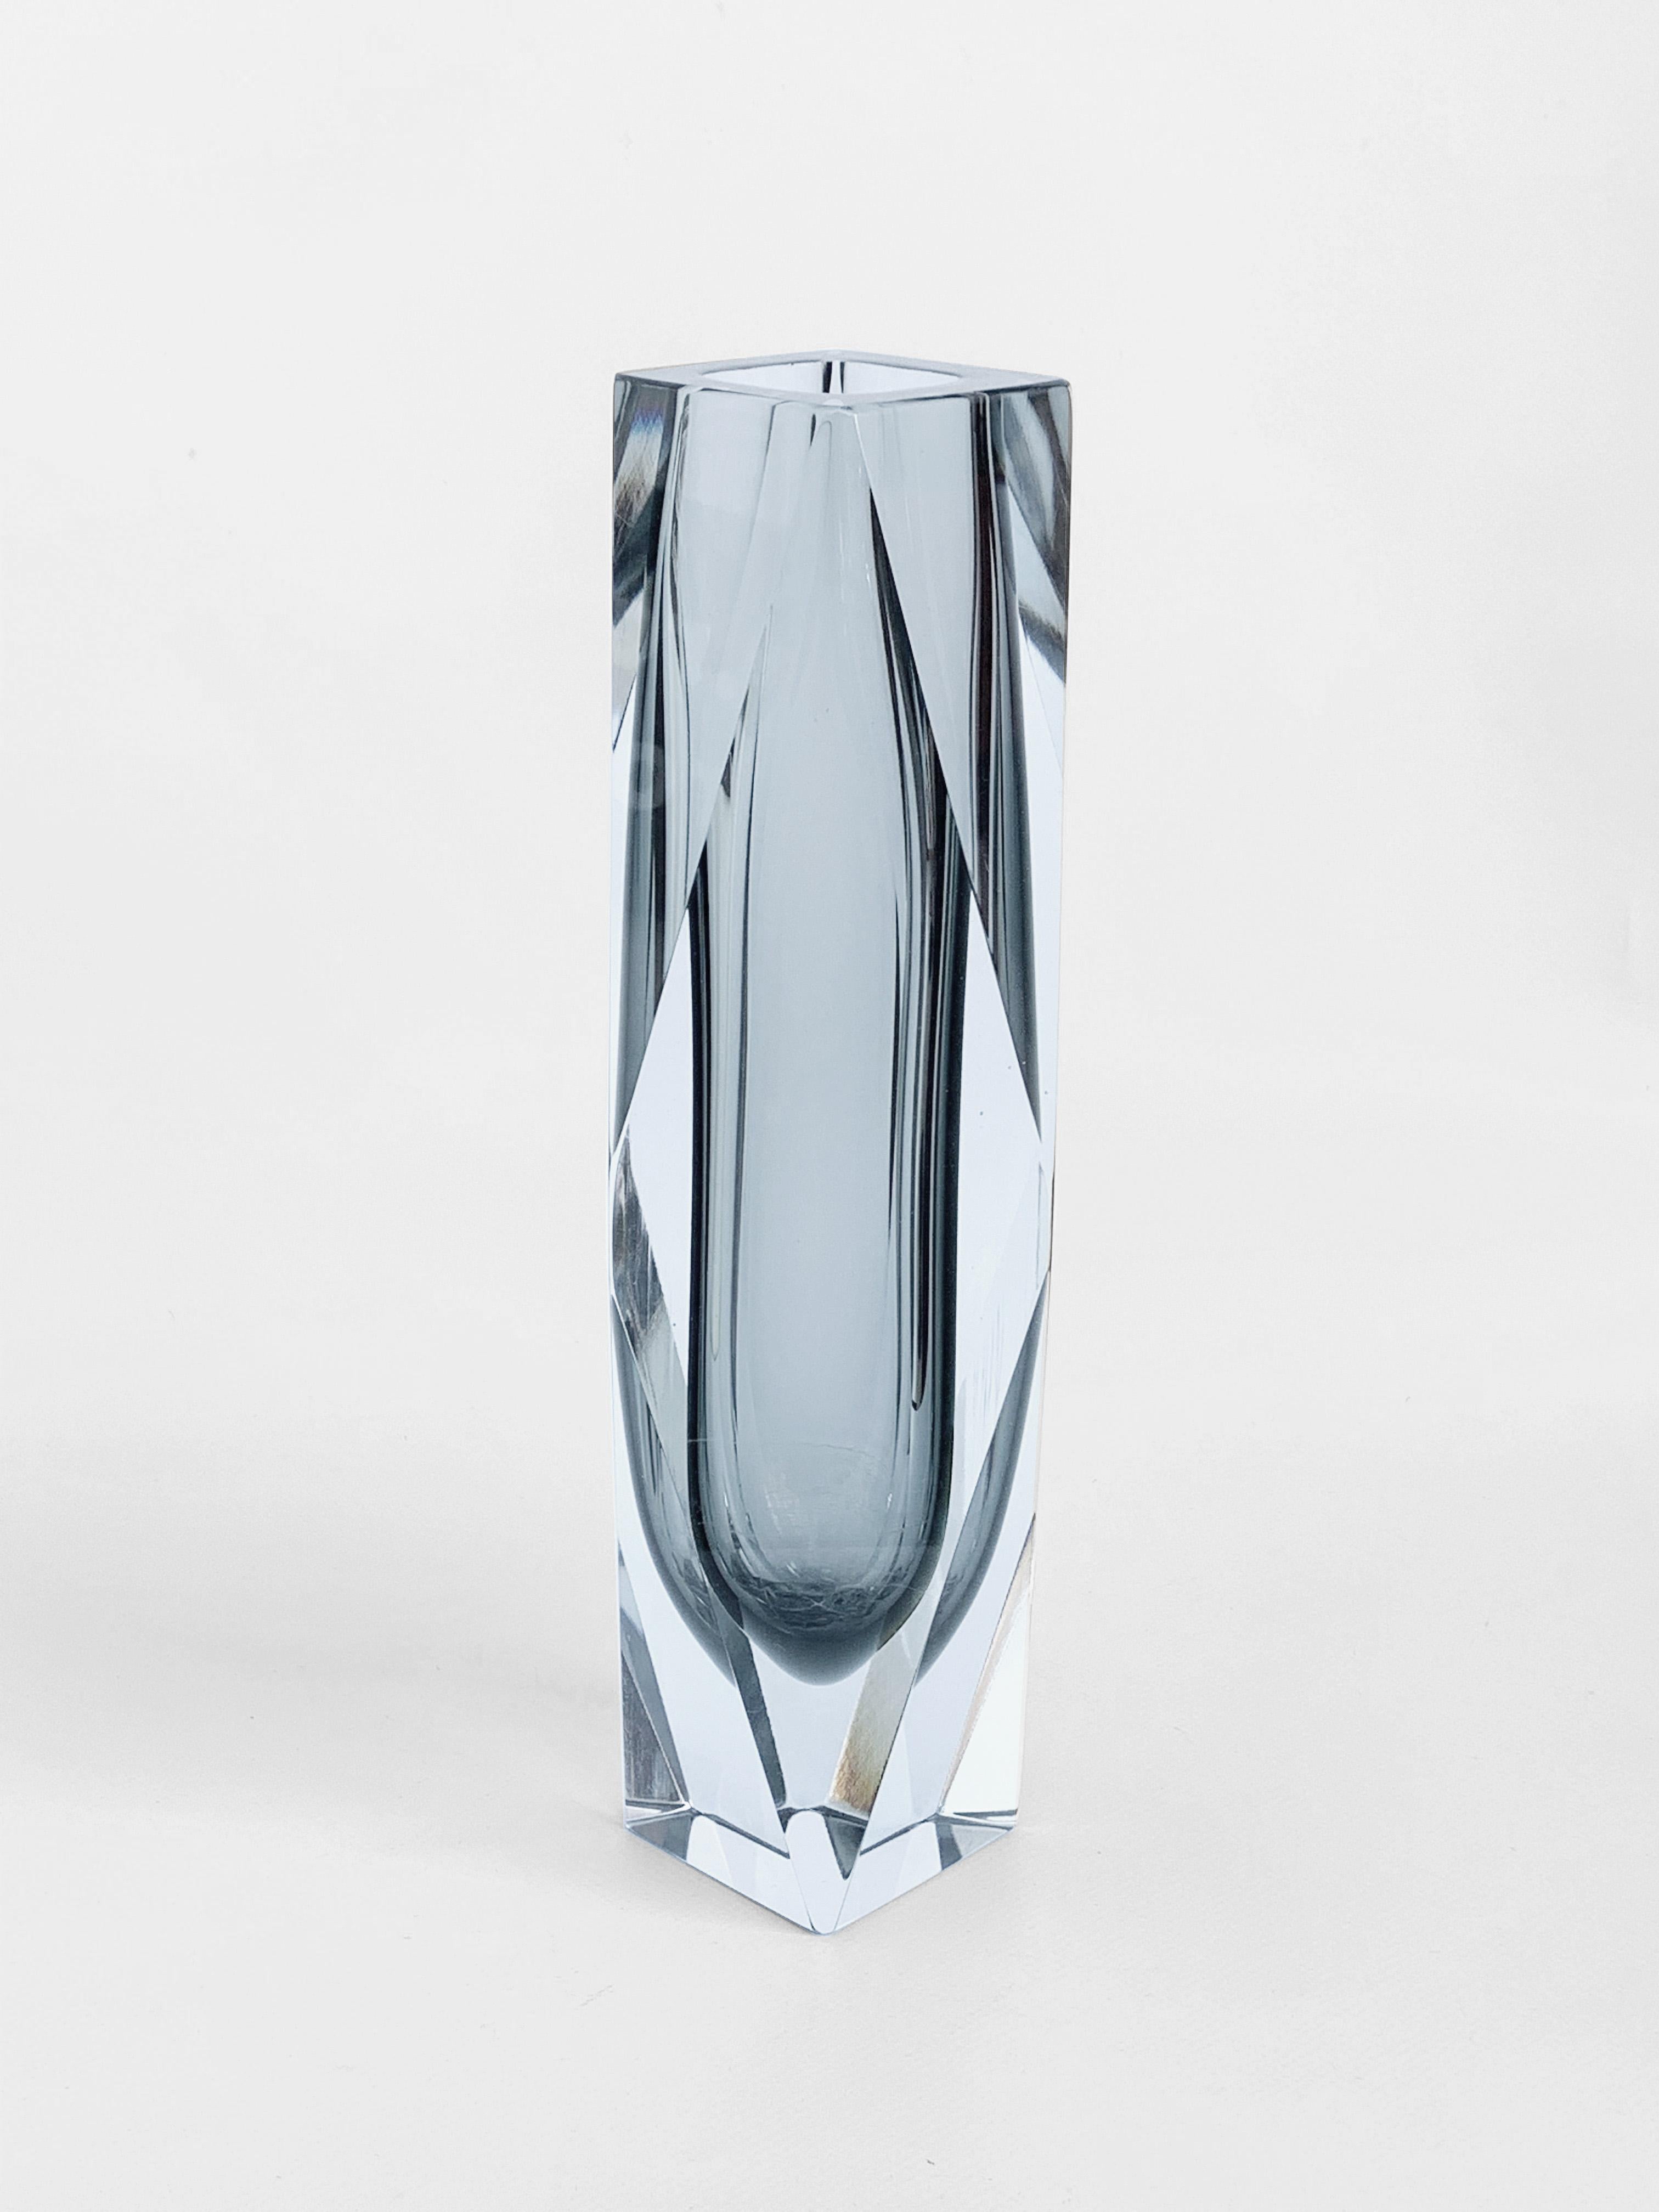 20th Century Murano, Submerged Glass Vase, Colour Smoky Gray, Mandruzzato Italy, 1960s For Sale